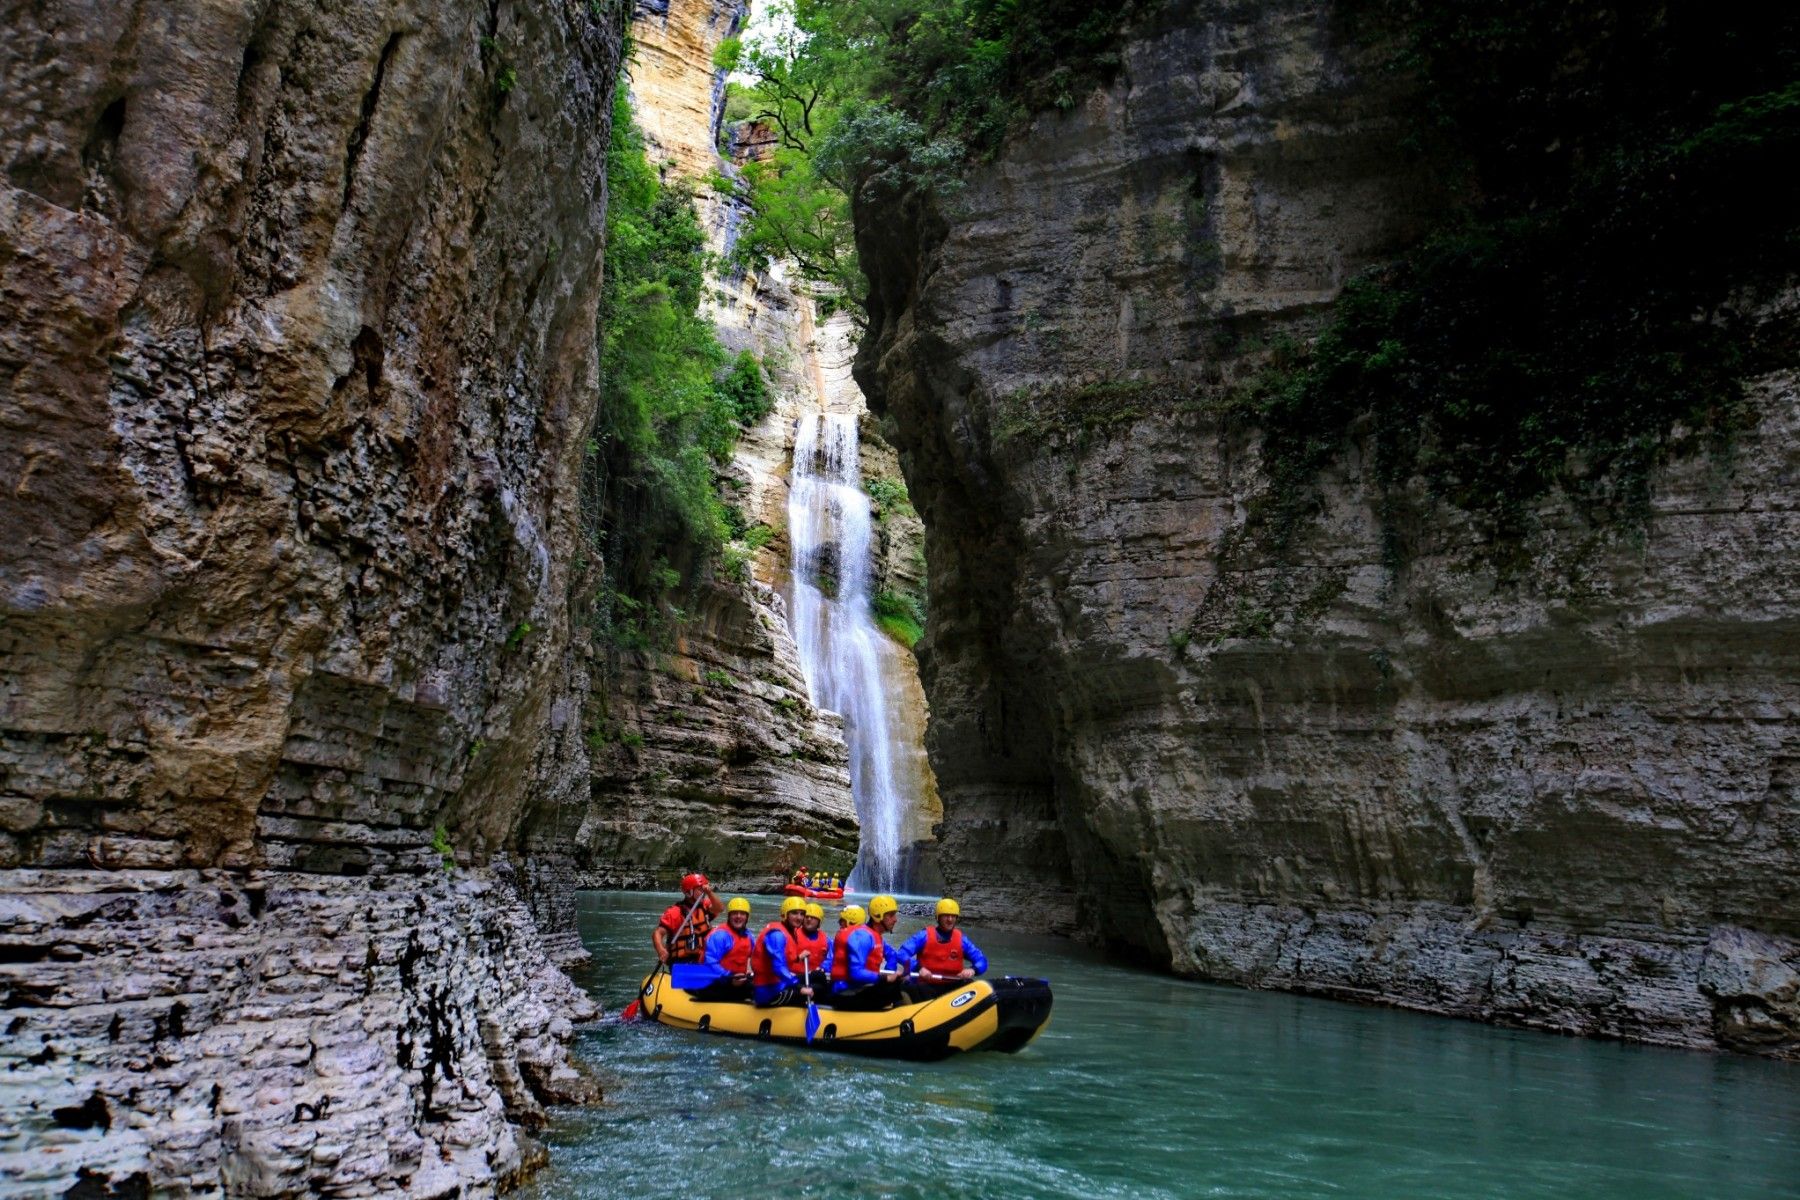 Rafting down the Osumi Canyon in Albania. Photo: Albania Rafting.